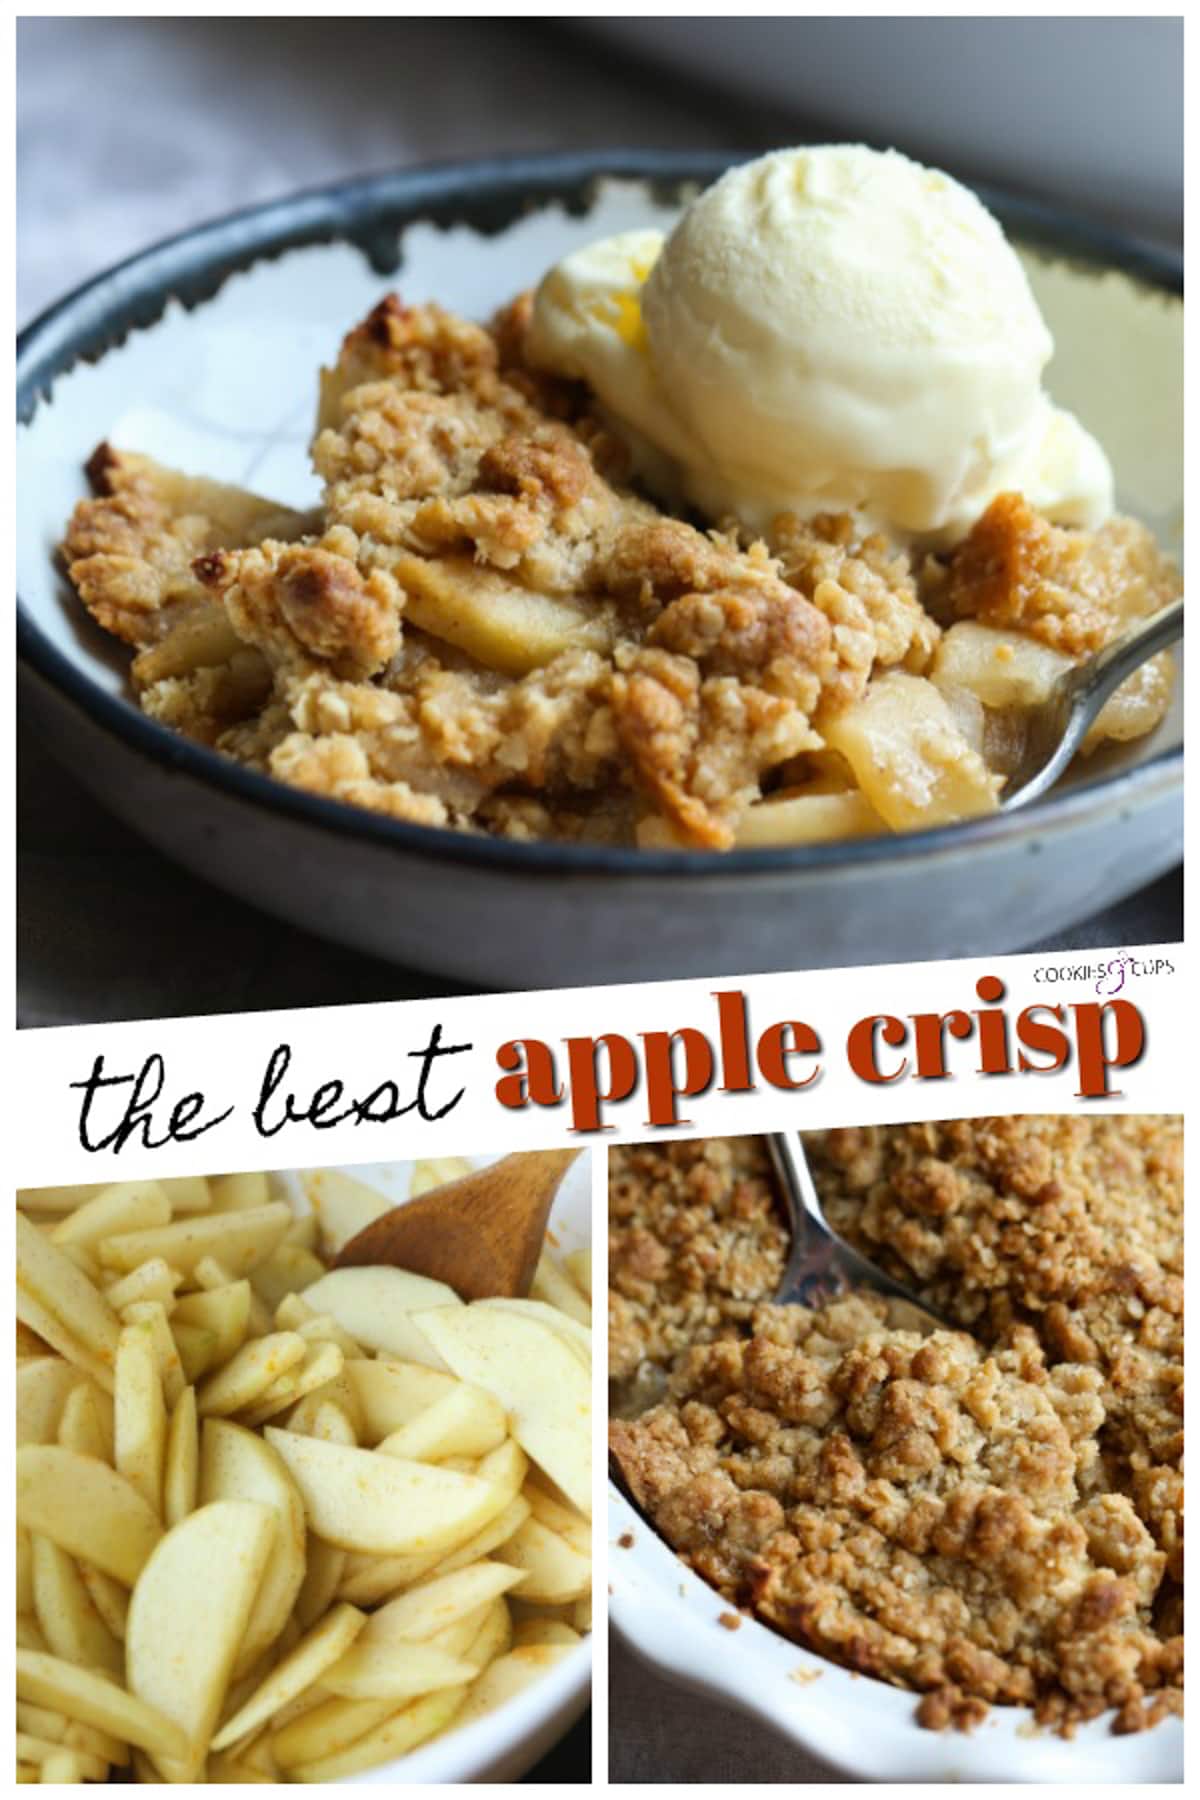 Apple Crisp Pinterest Image collage